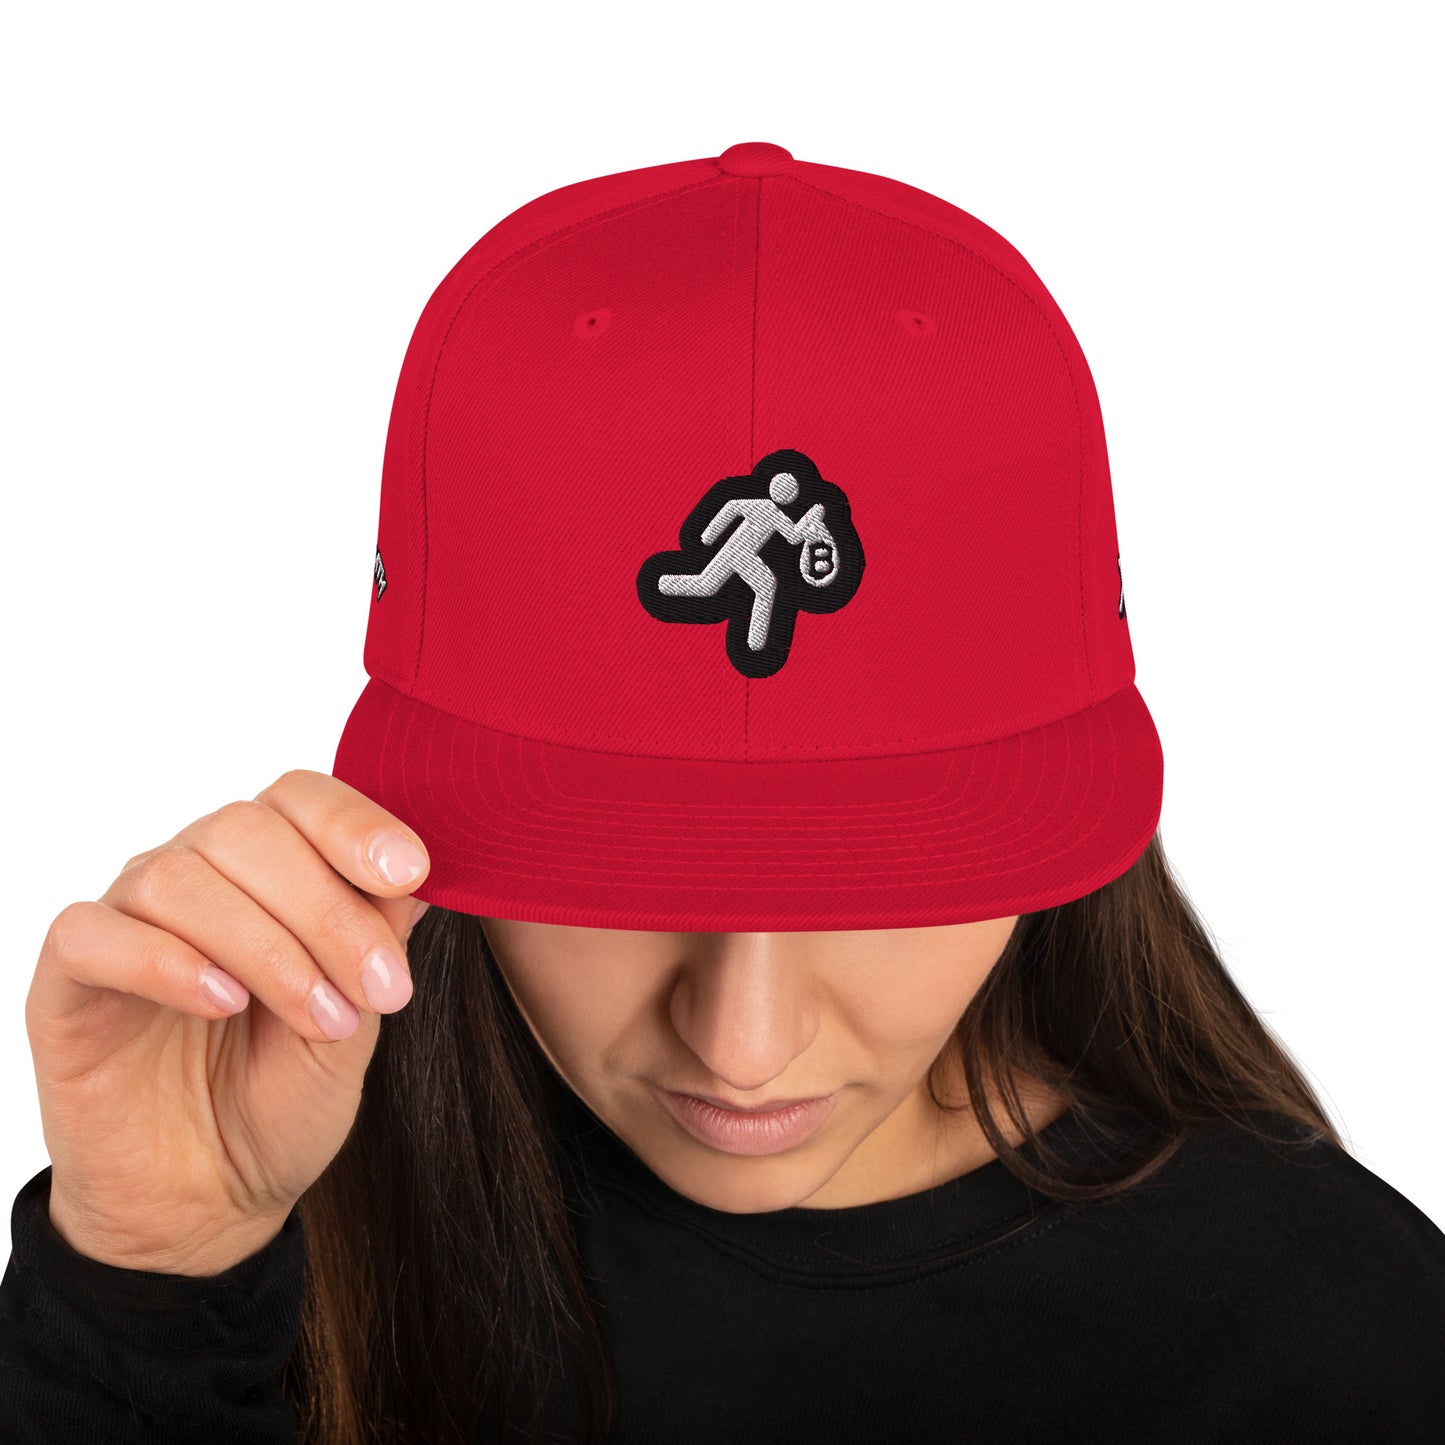 ATZ BTC Snapback Hat